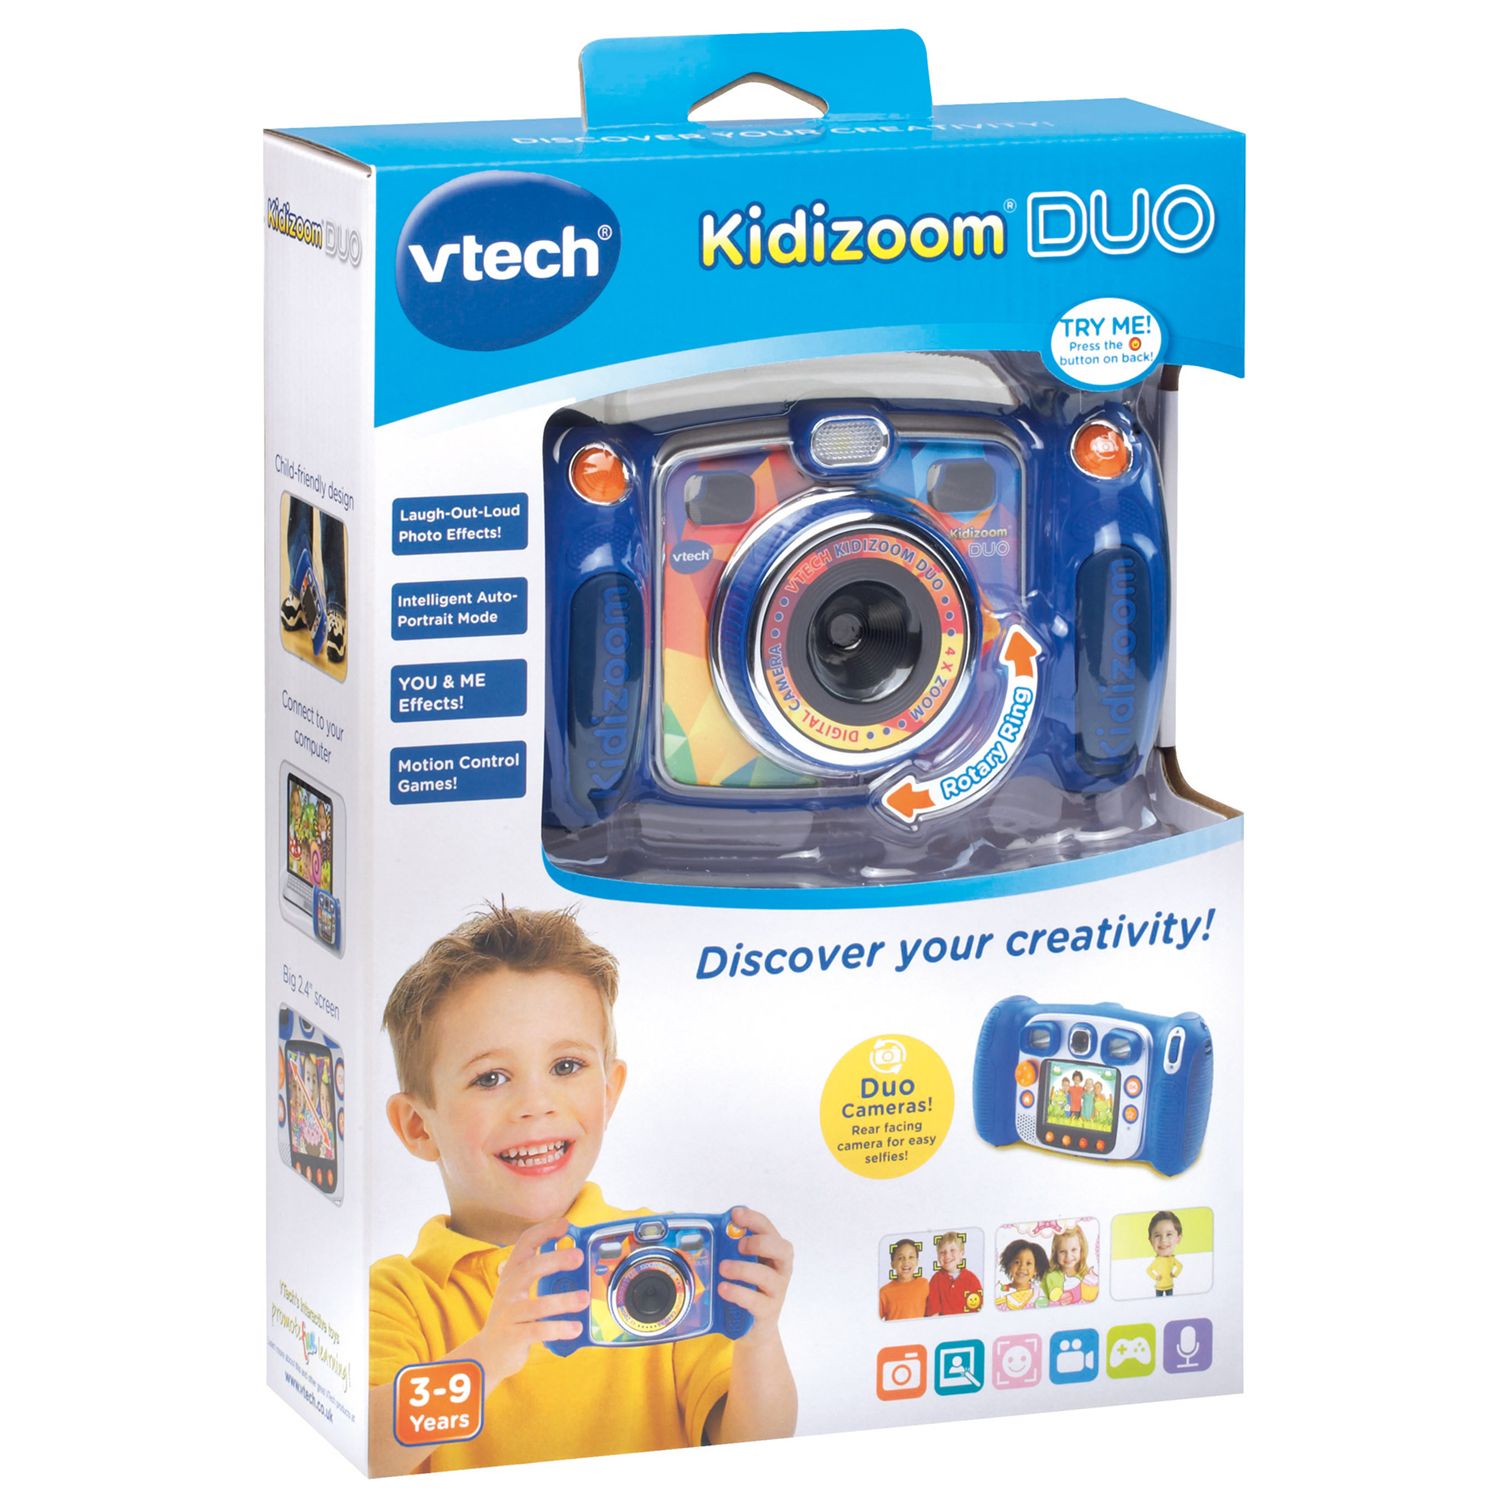 vtech kidizoom duo camera sd card